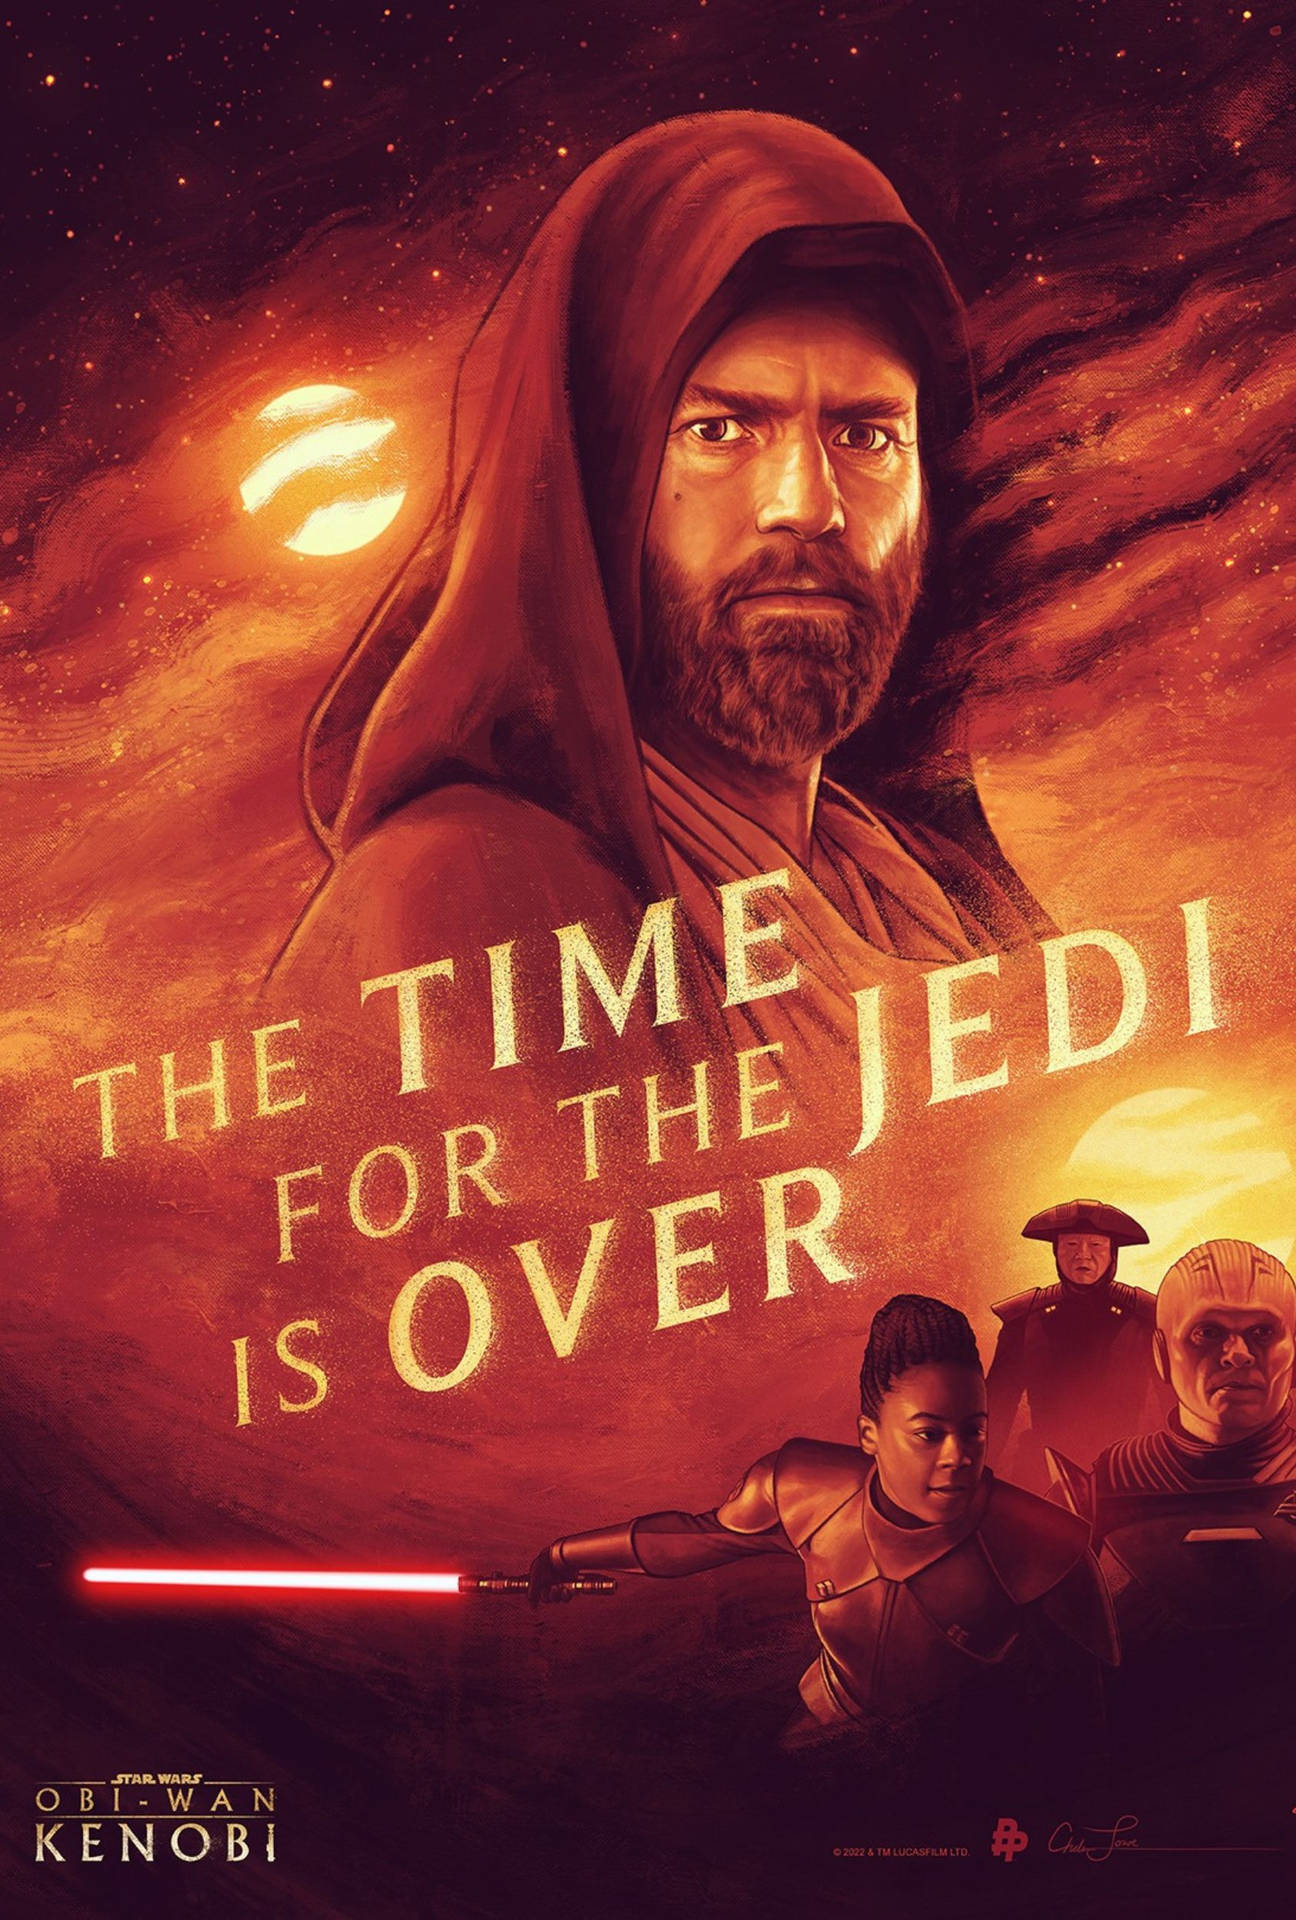 Obi Wan Kenobi Jedi Is Over Background